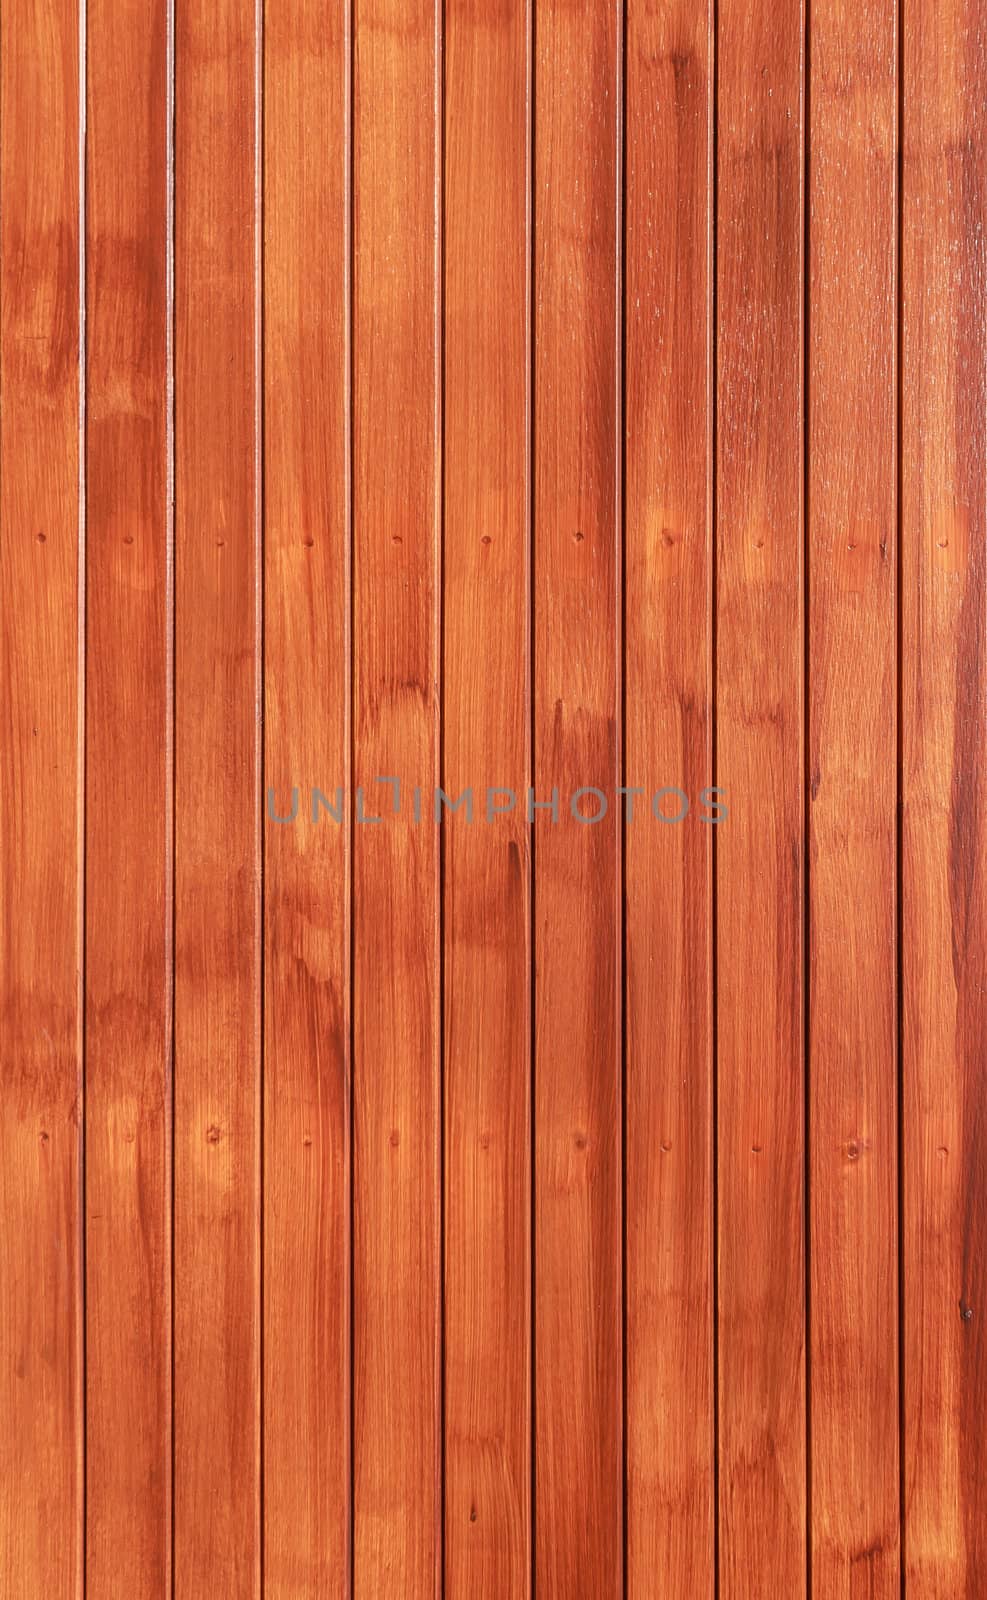 Brown Wood Background, Vertical Pattern by punpleng